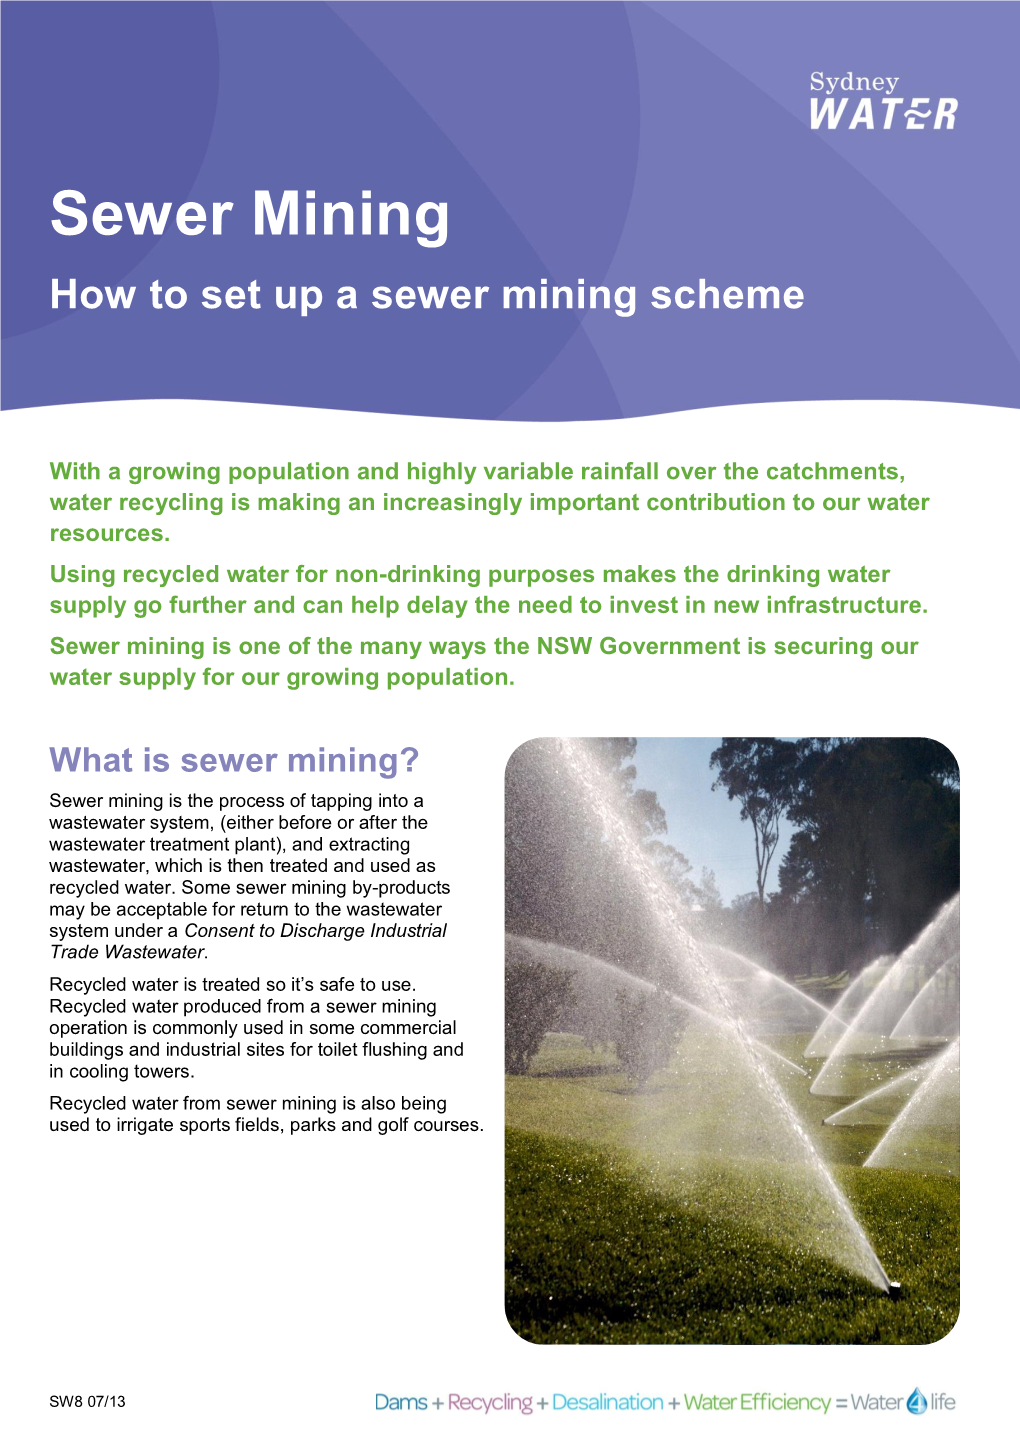 How to Set up a Sewer Mining Scheme